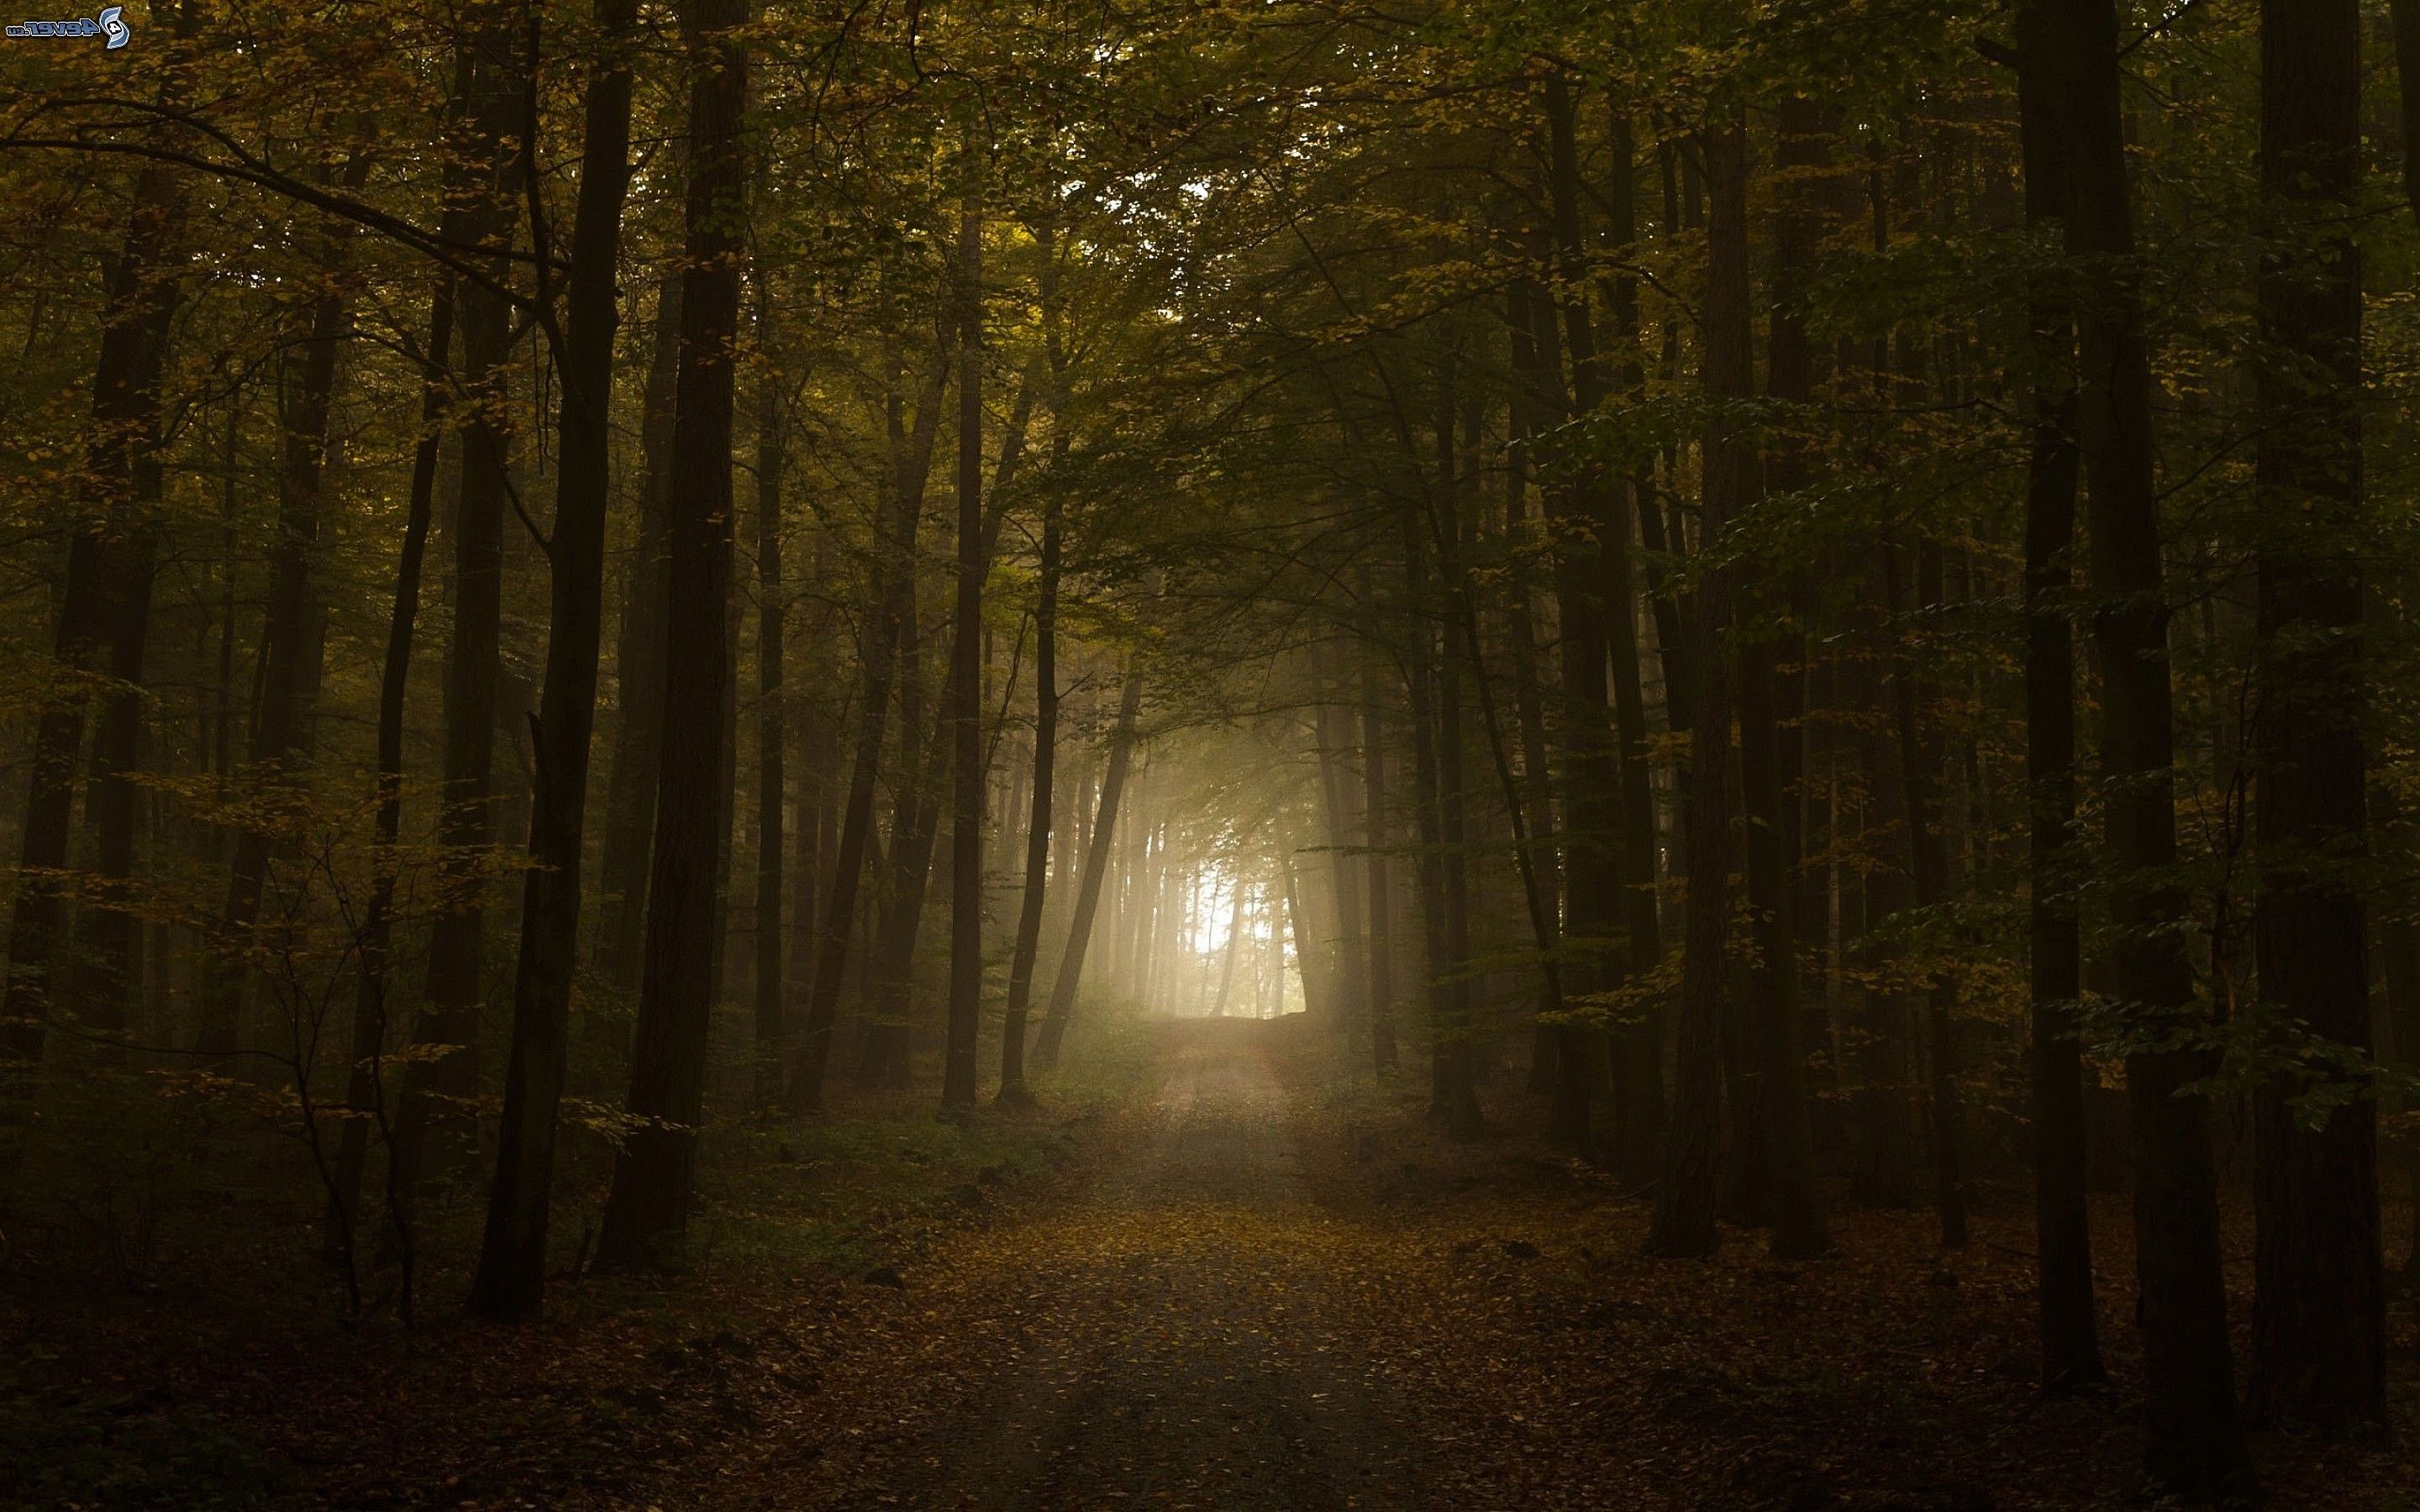 Dark weird wonderful forest through which you being a tourist or a